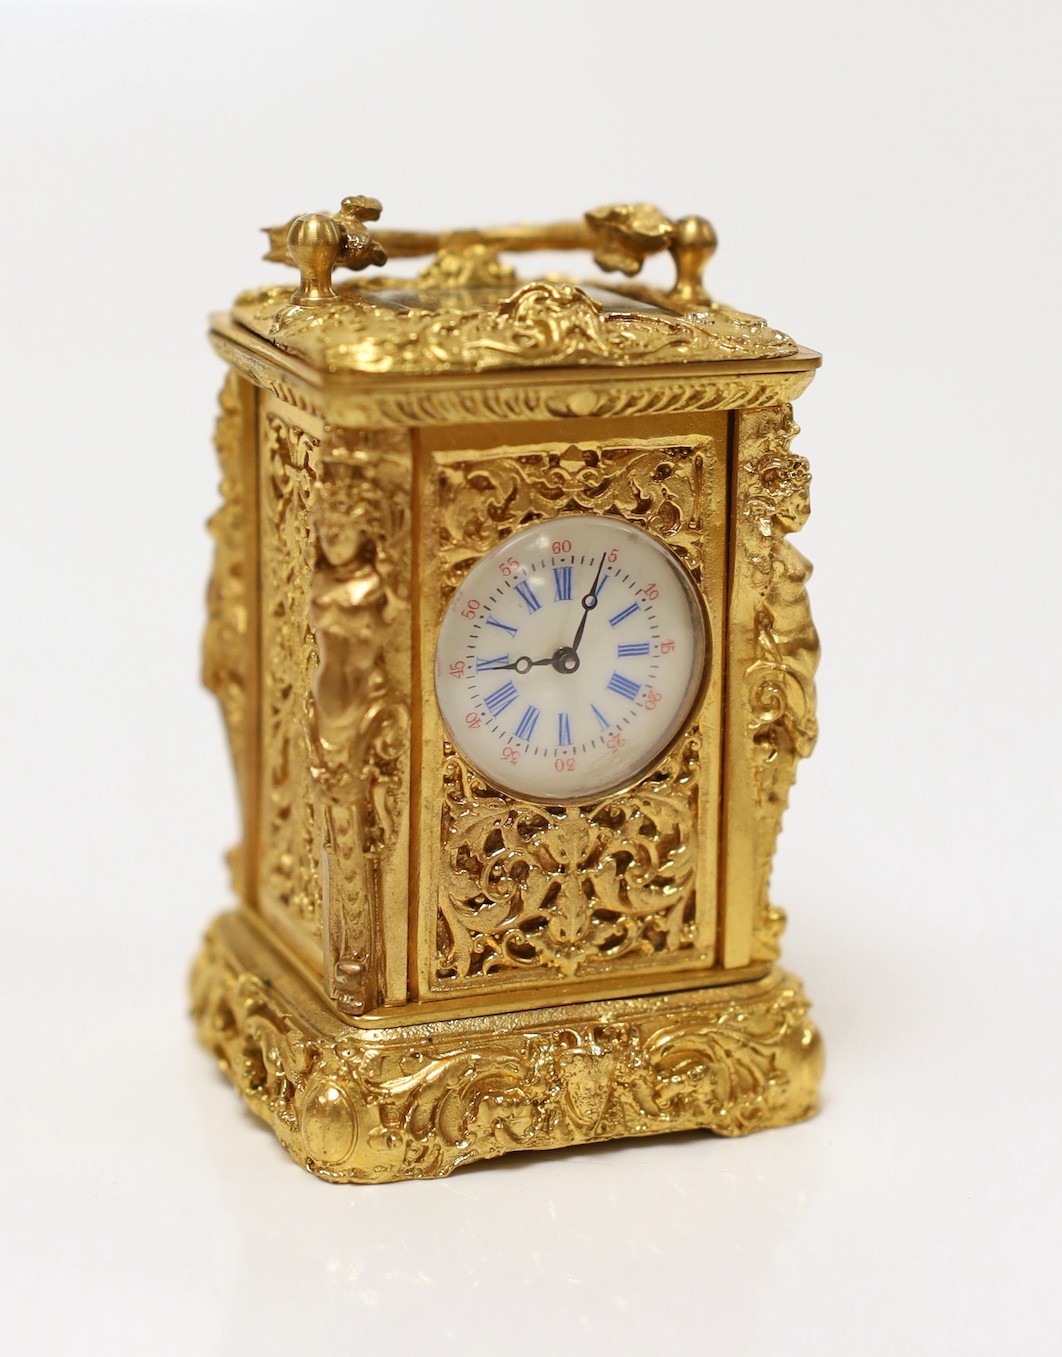 A miniature carriage timepiece, 7cms high